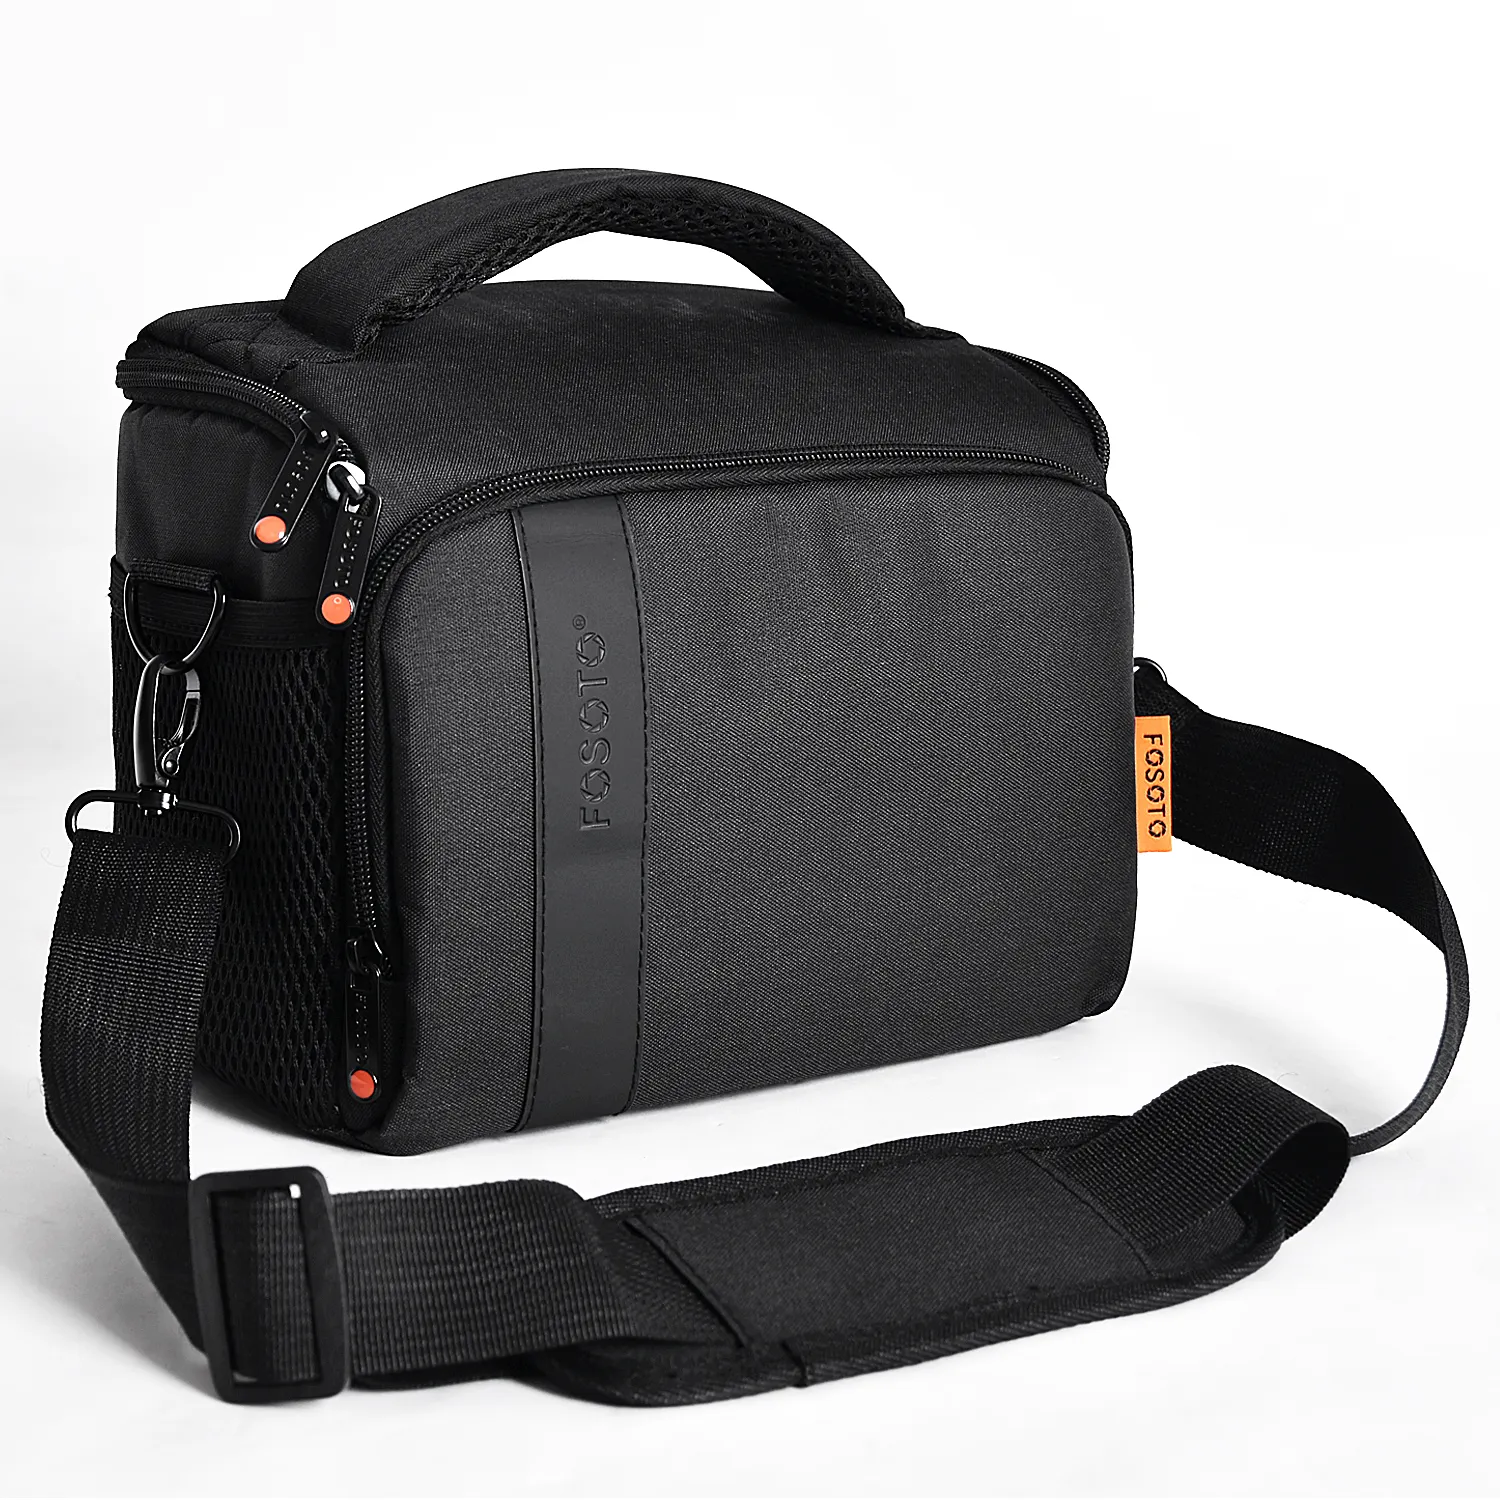 Водонепроницаемая сумка FOSOTO для DSLR-камер, Модный чехол на плечо для видеокамер Canon, Nikon, Sony, чехол для объектива, сумка для фотосъемки